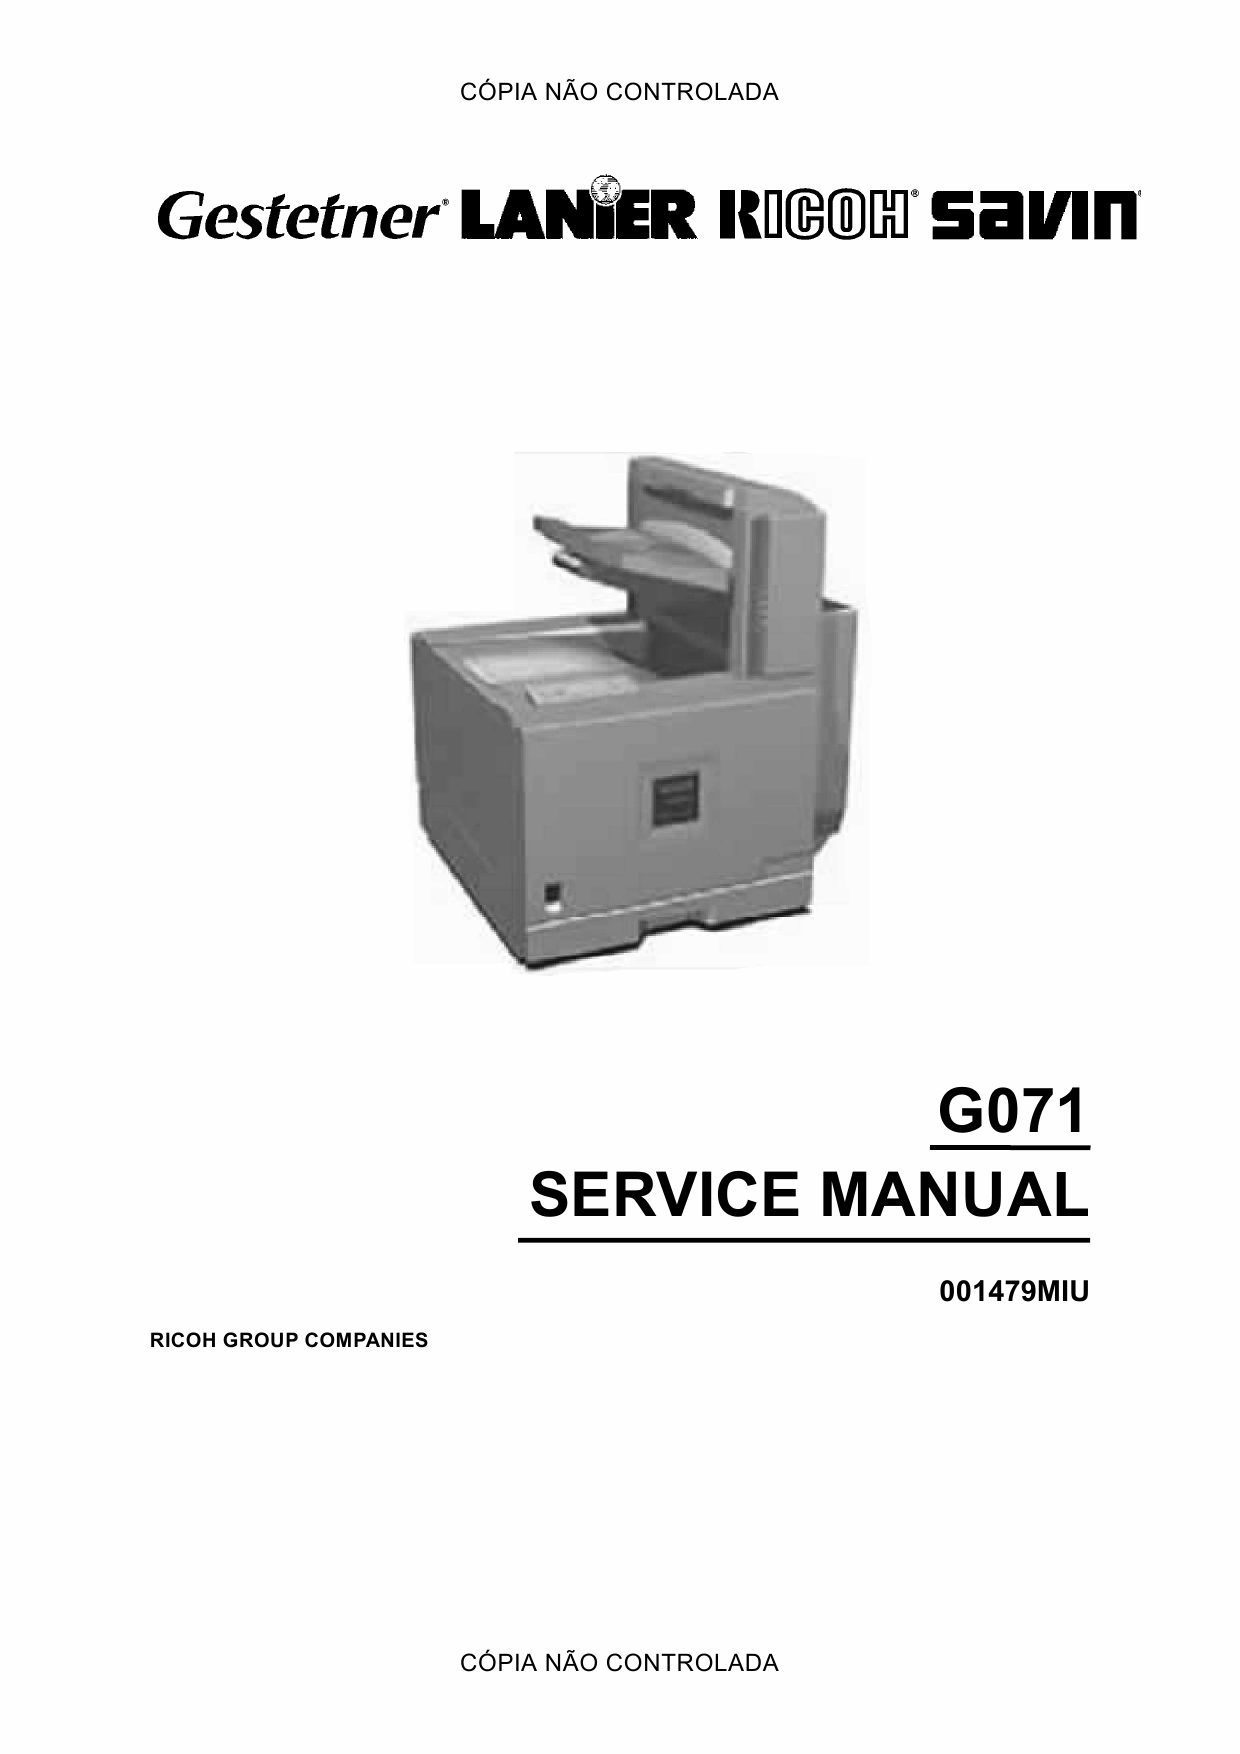 RICOH Aficio CL-5000 G071 Service Manual-1